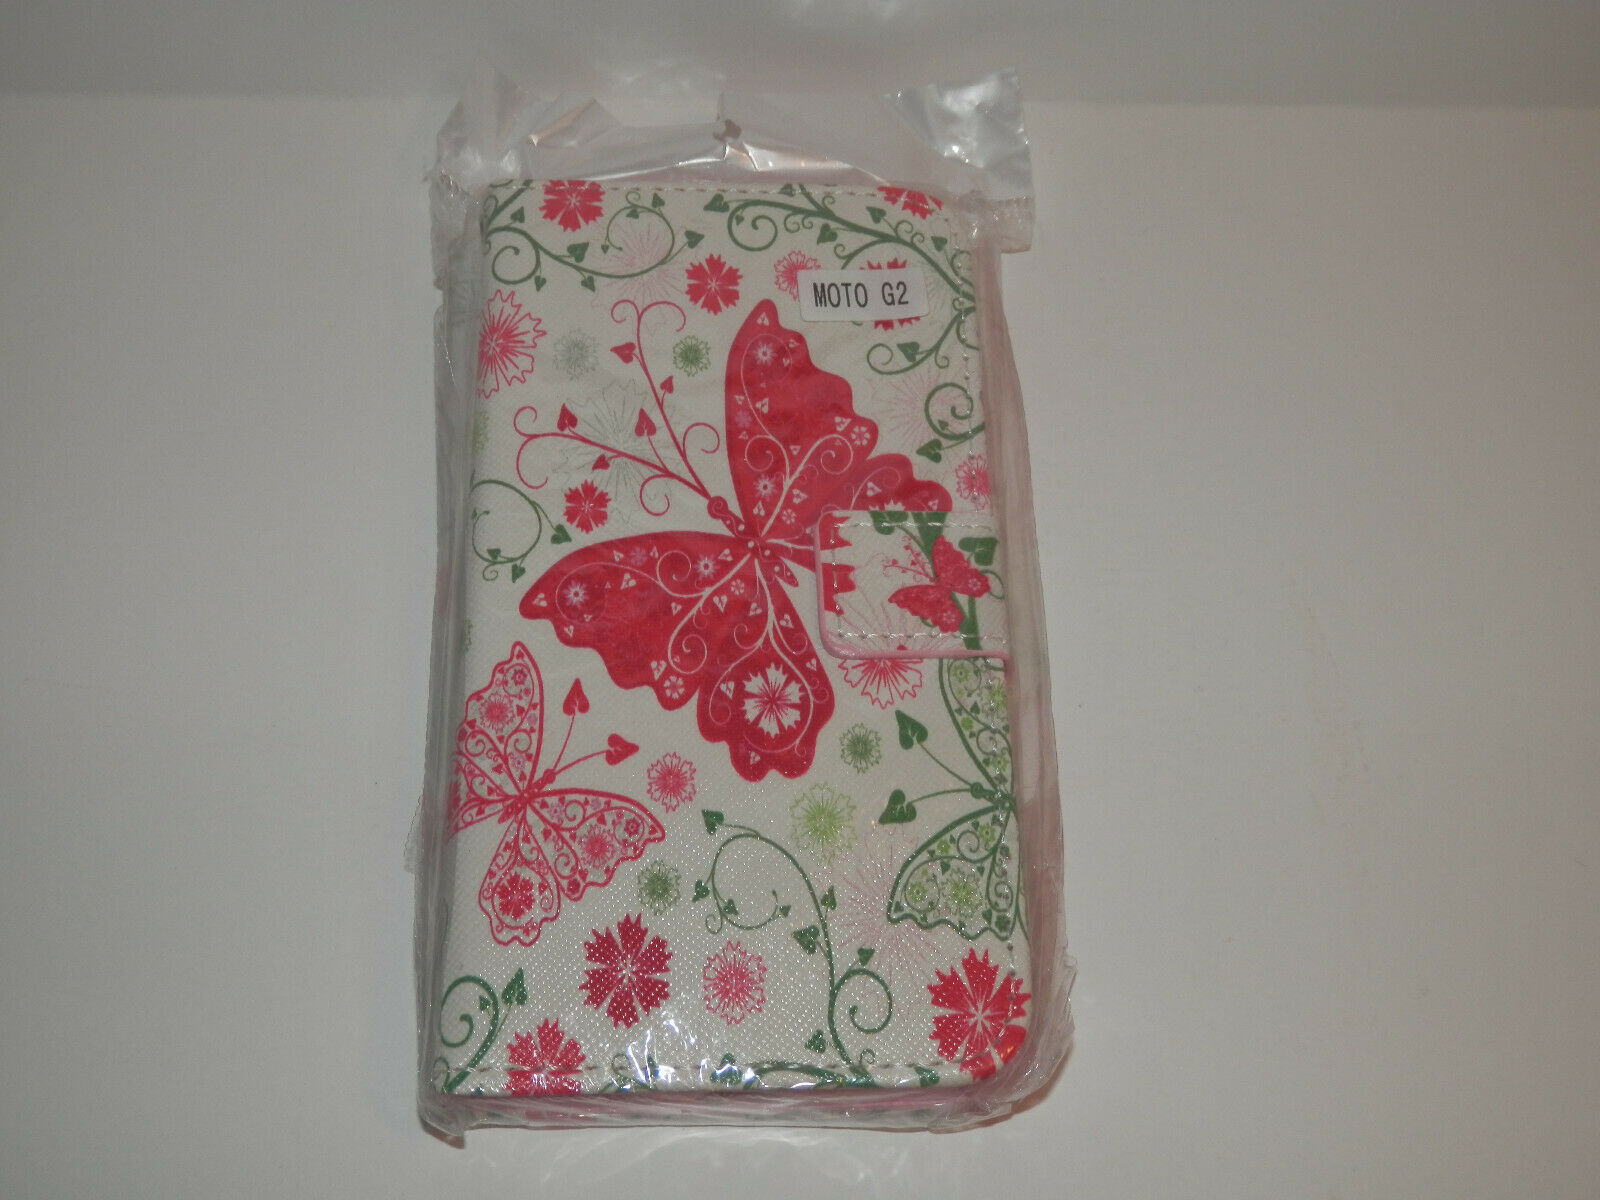 Motorola Moto G2 Cell Phone Case - Butterfly Pink White Green (Like New) - $6.89